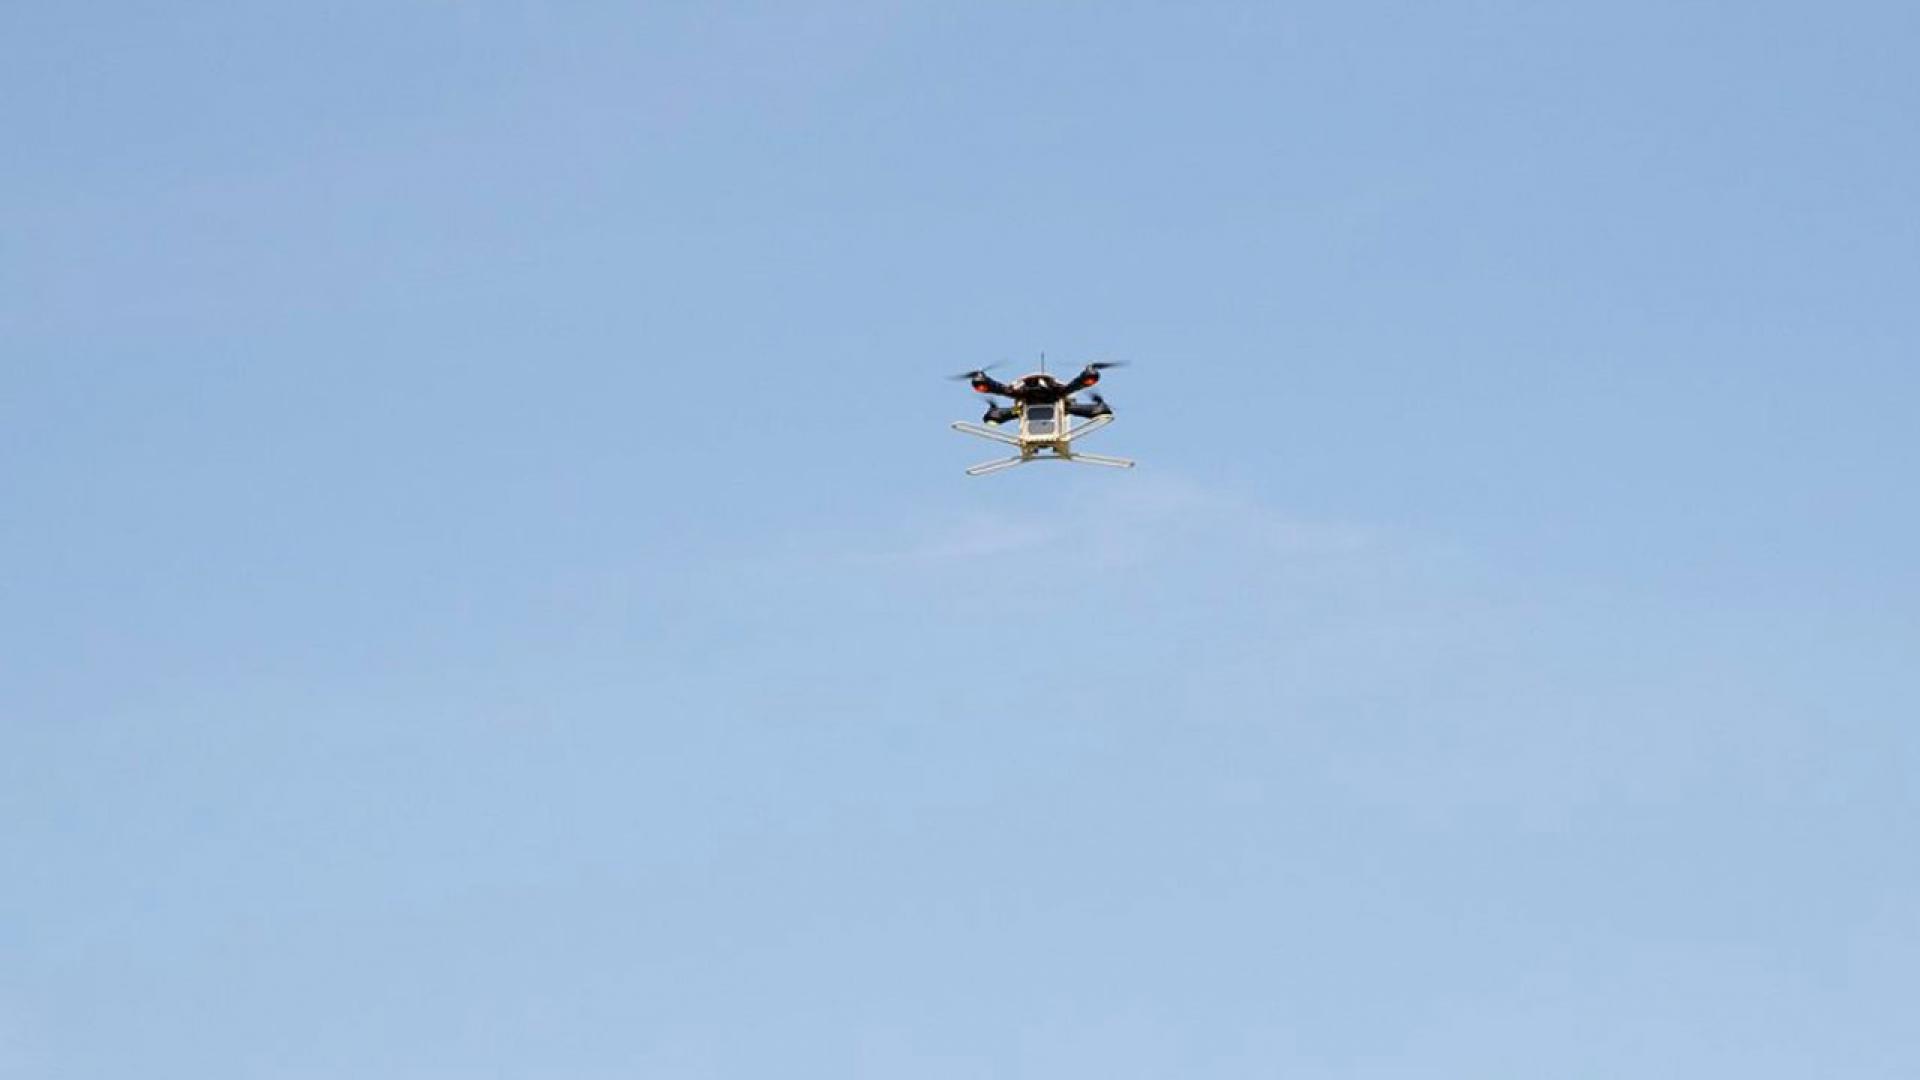 Kitsat flying under a drone